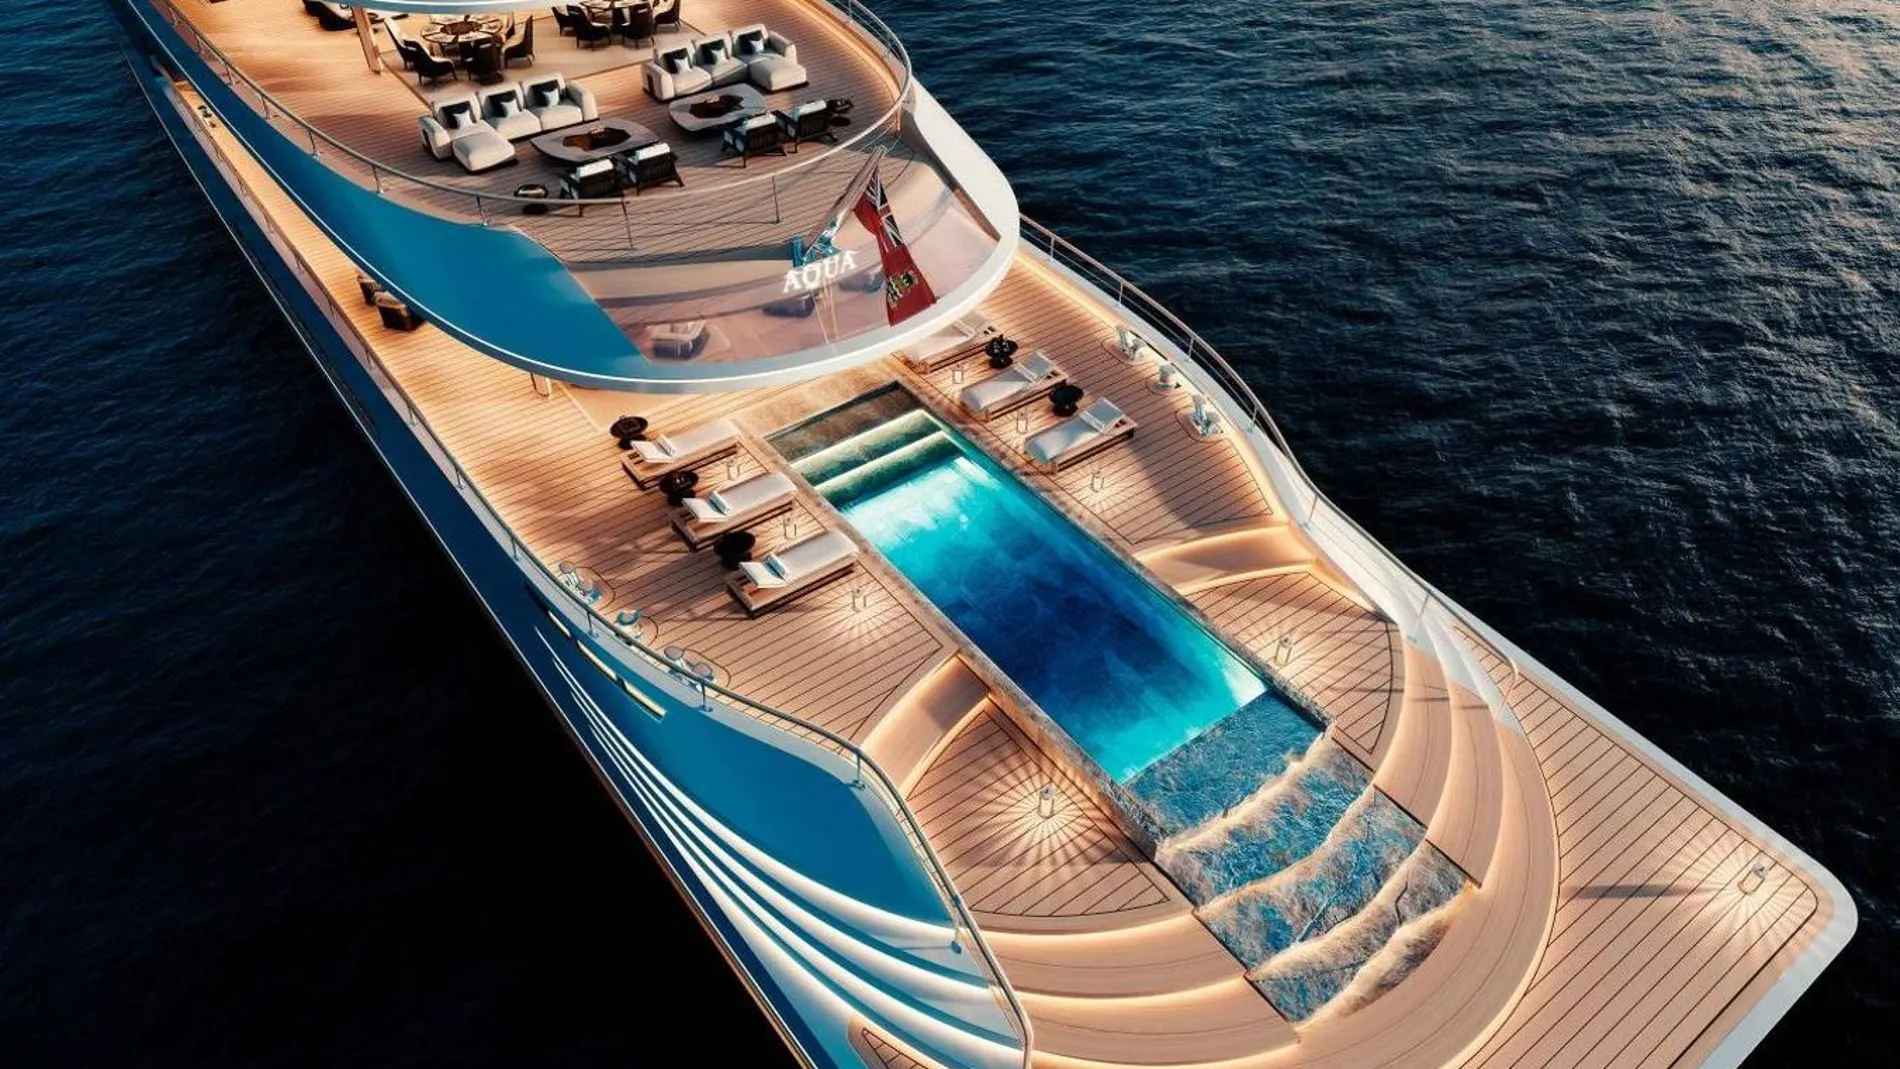 Aqua, de Sinot Yacht Architecture & Design